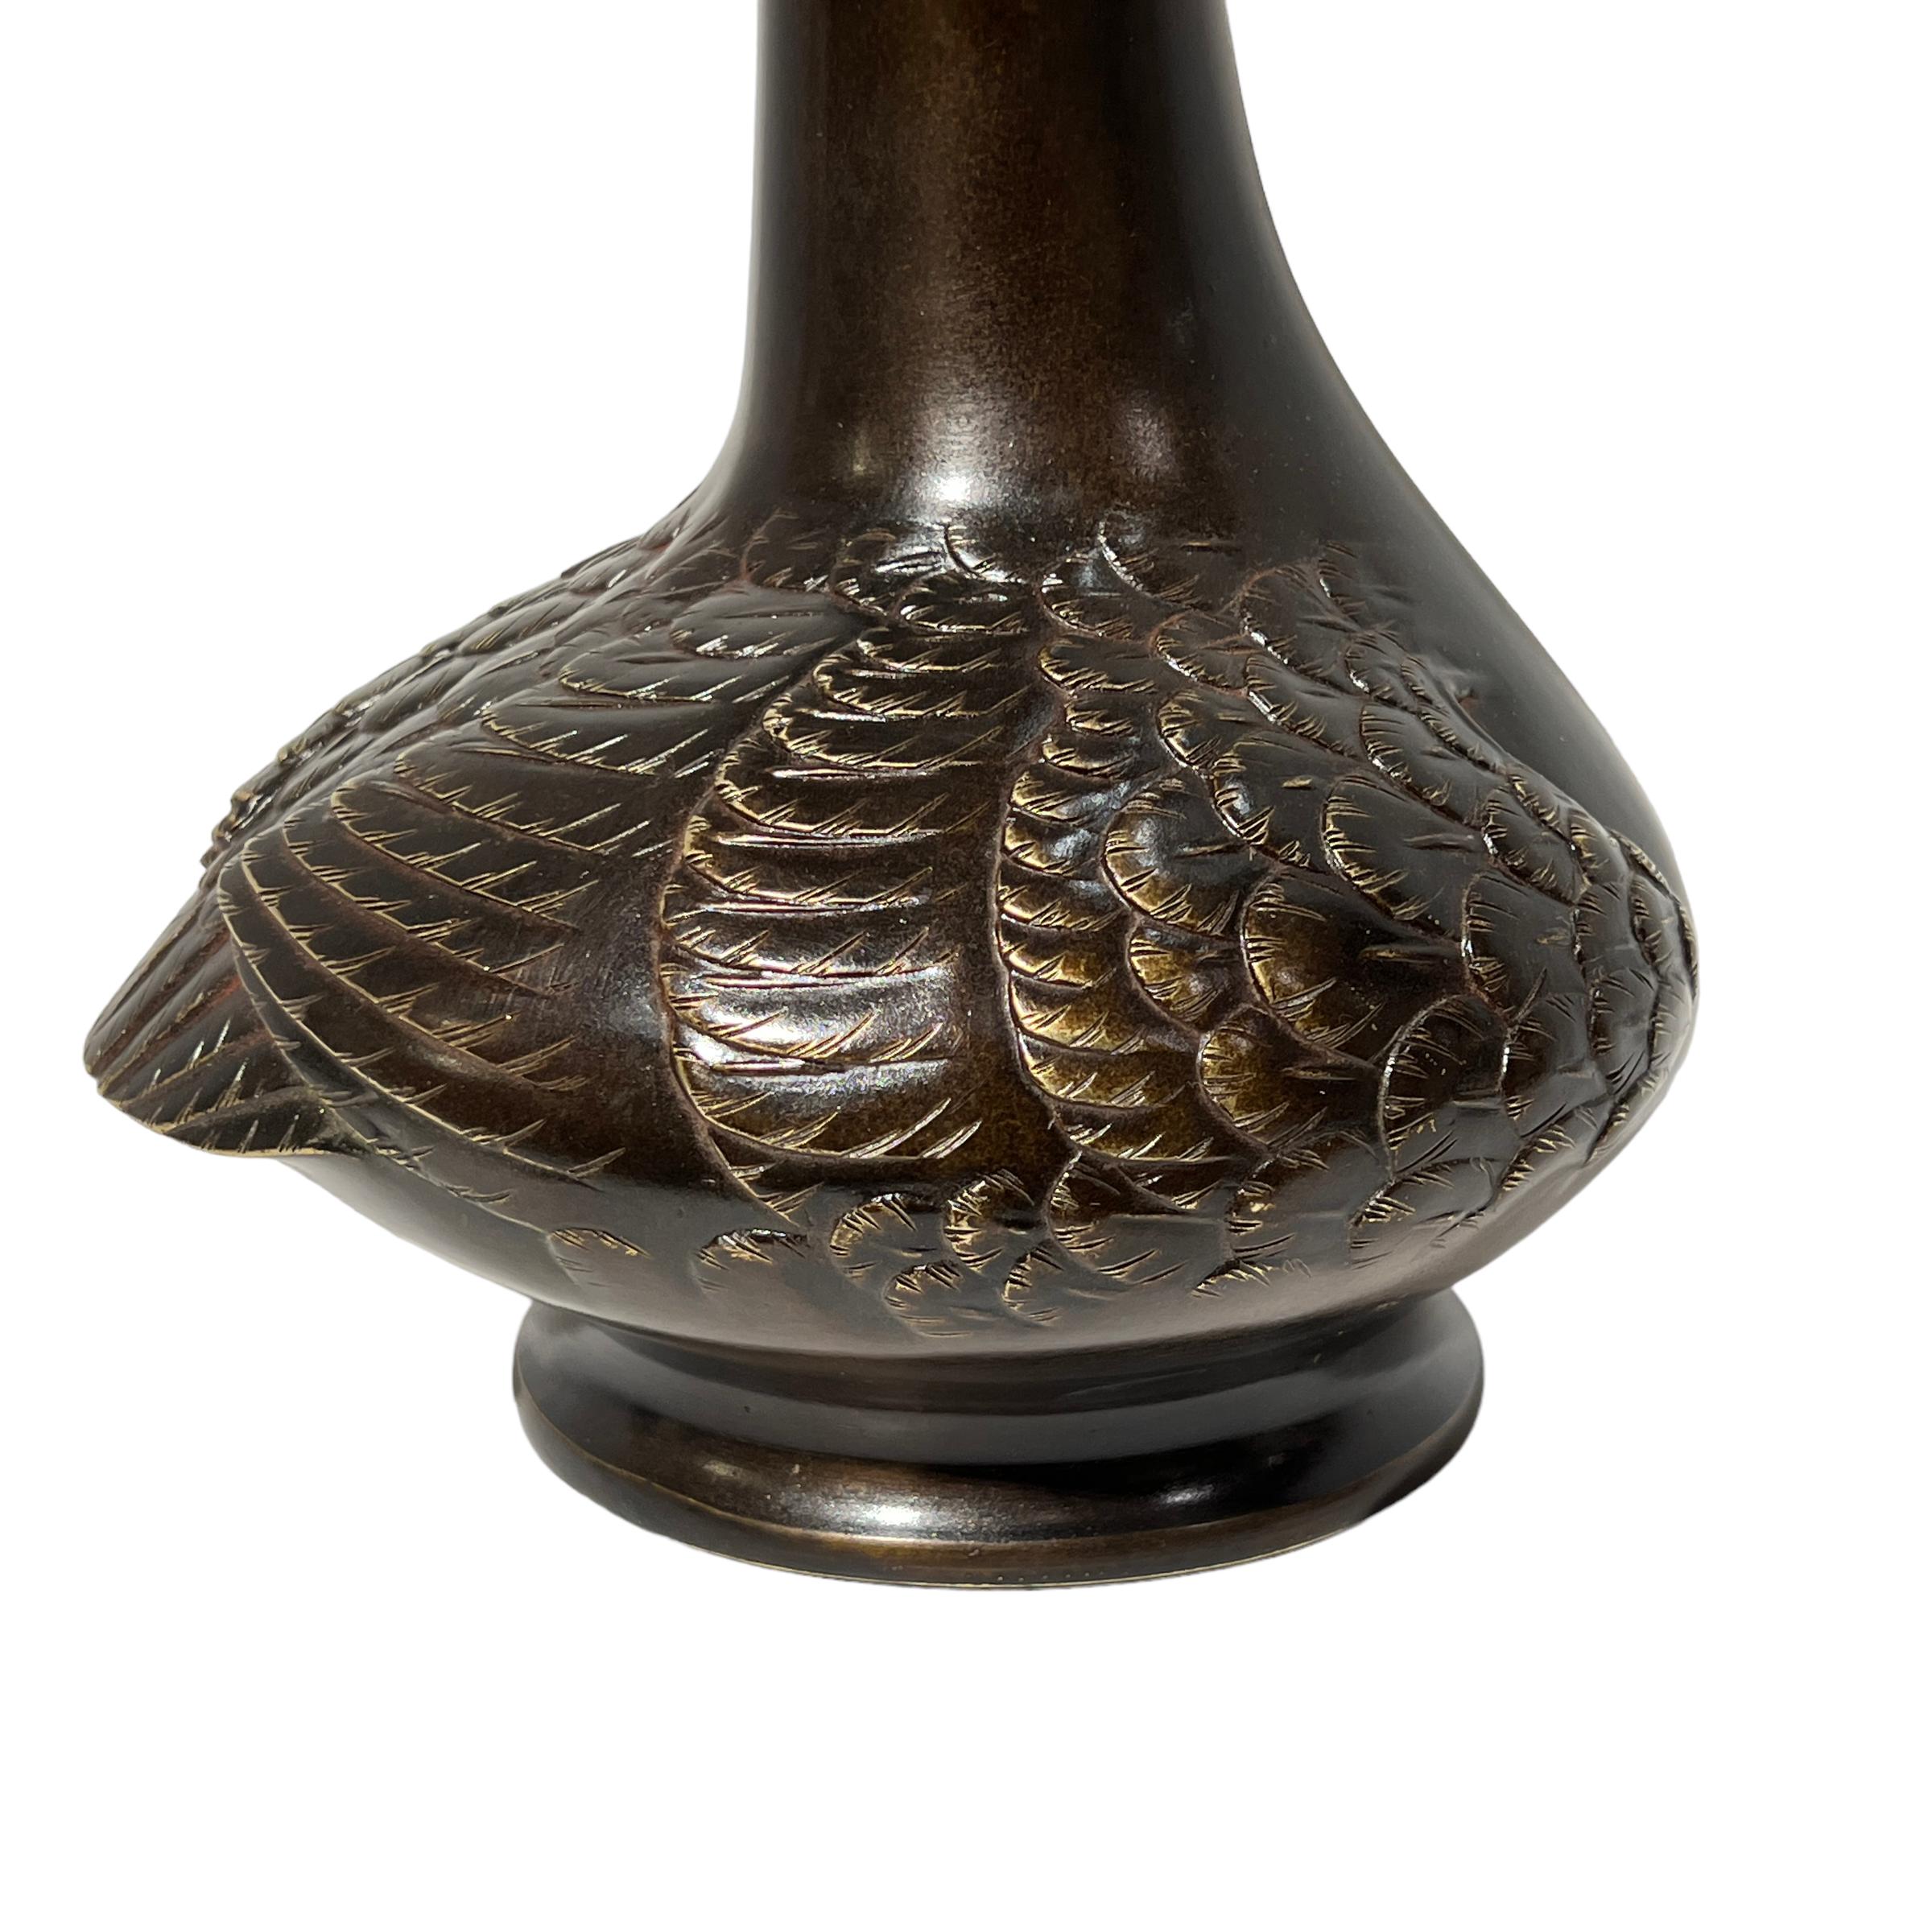 Antique 19th Century Japanese Meiji Period Bronze Vase with Bird Form For Sale 3